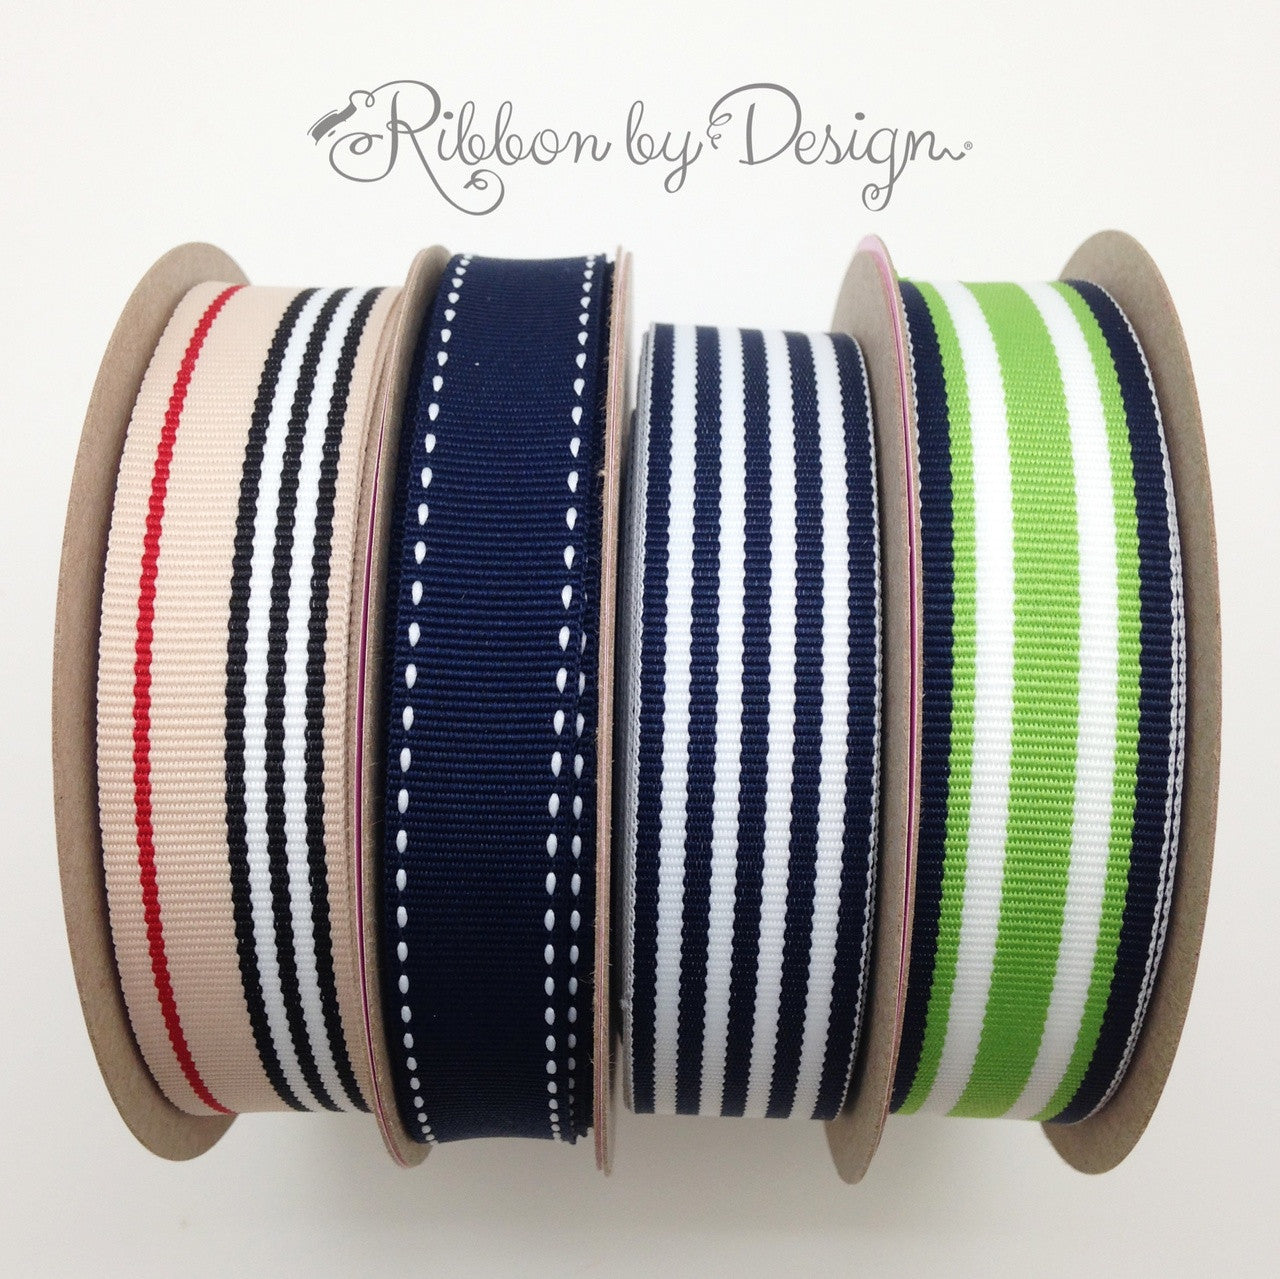 Stripes Ribbon in Tan, White, Red, and Black Woven in 7/8" Grosgrain Ribbon